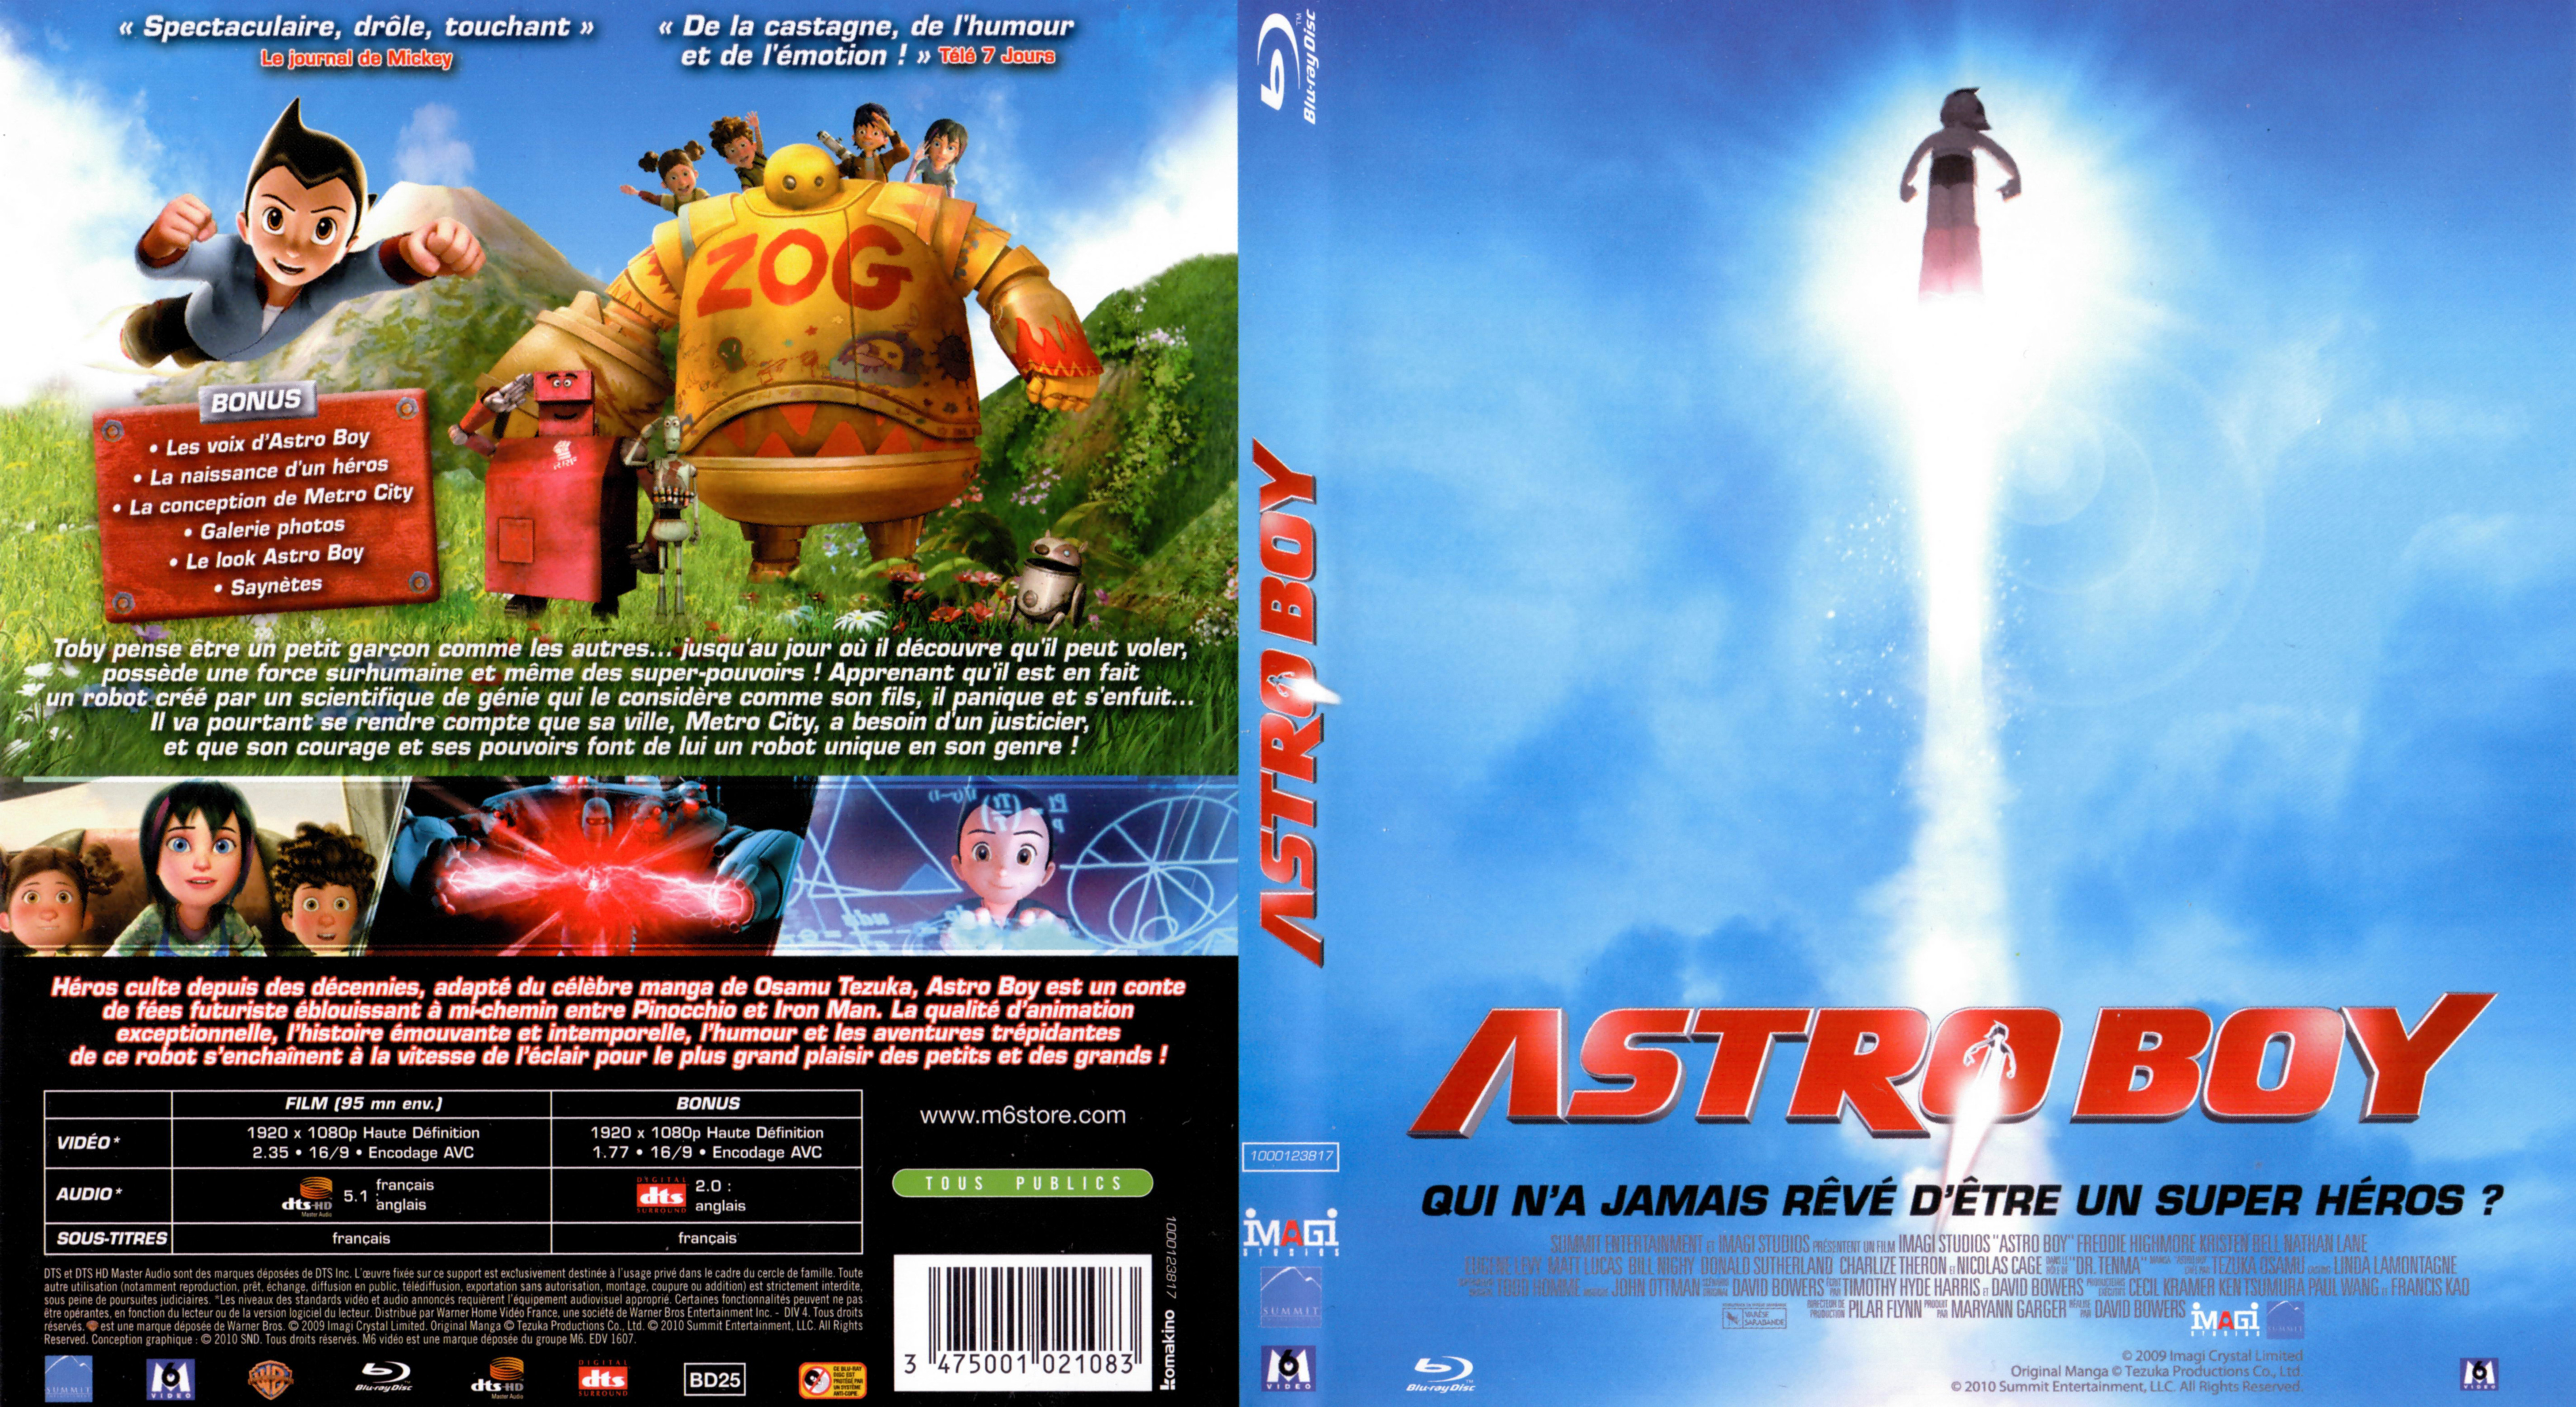 Jaquette DVD de Astro boy (BLU-RAY) - Cinéma Passion